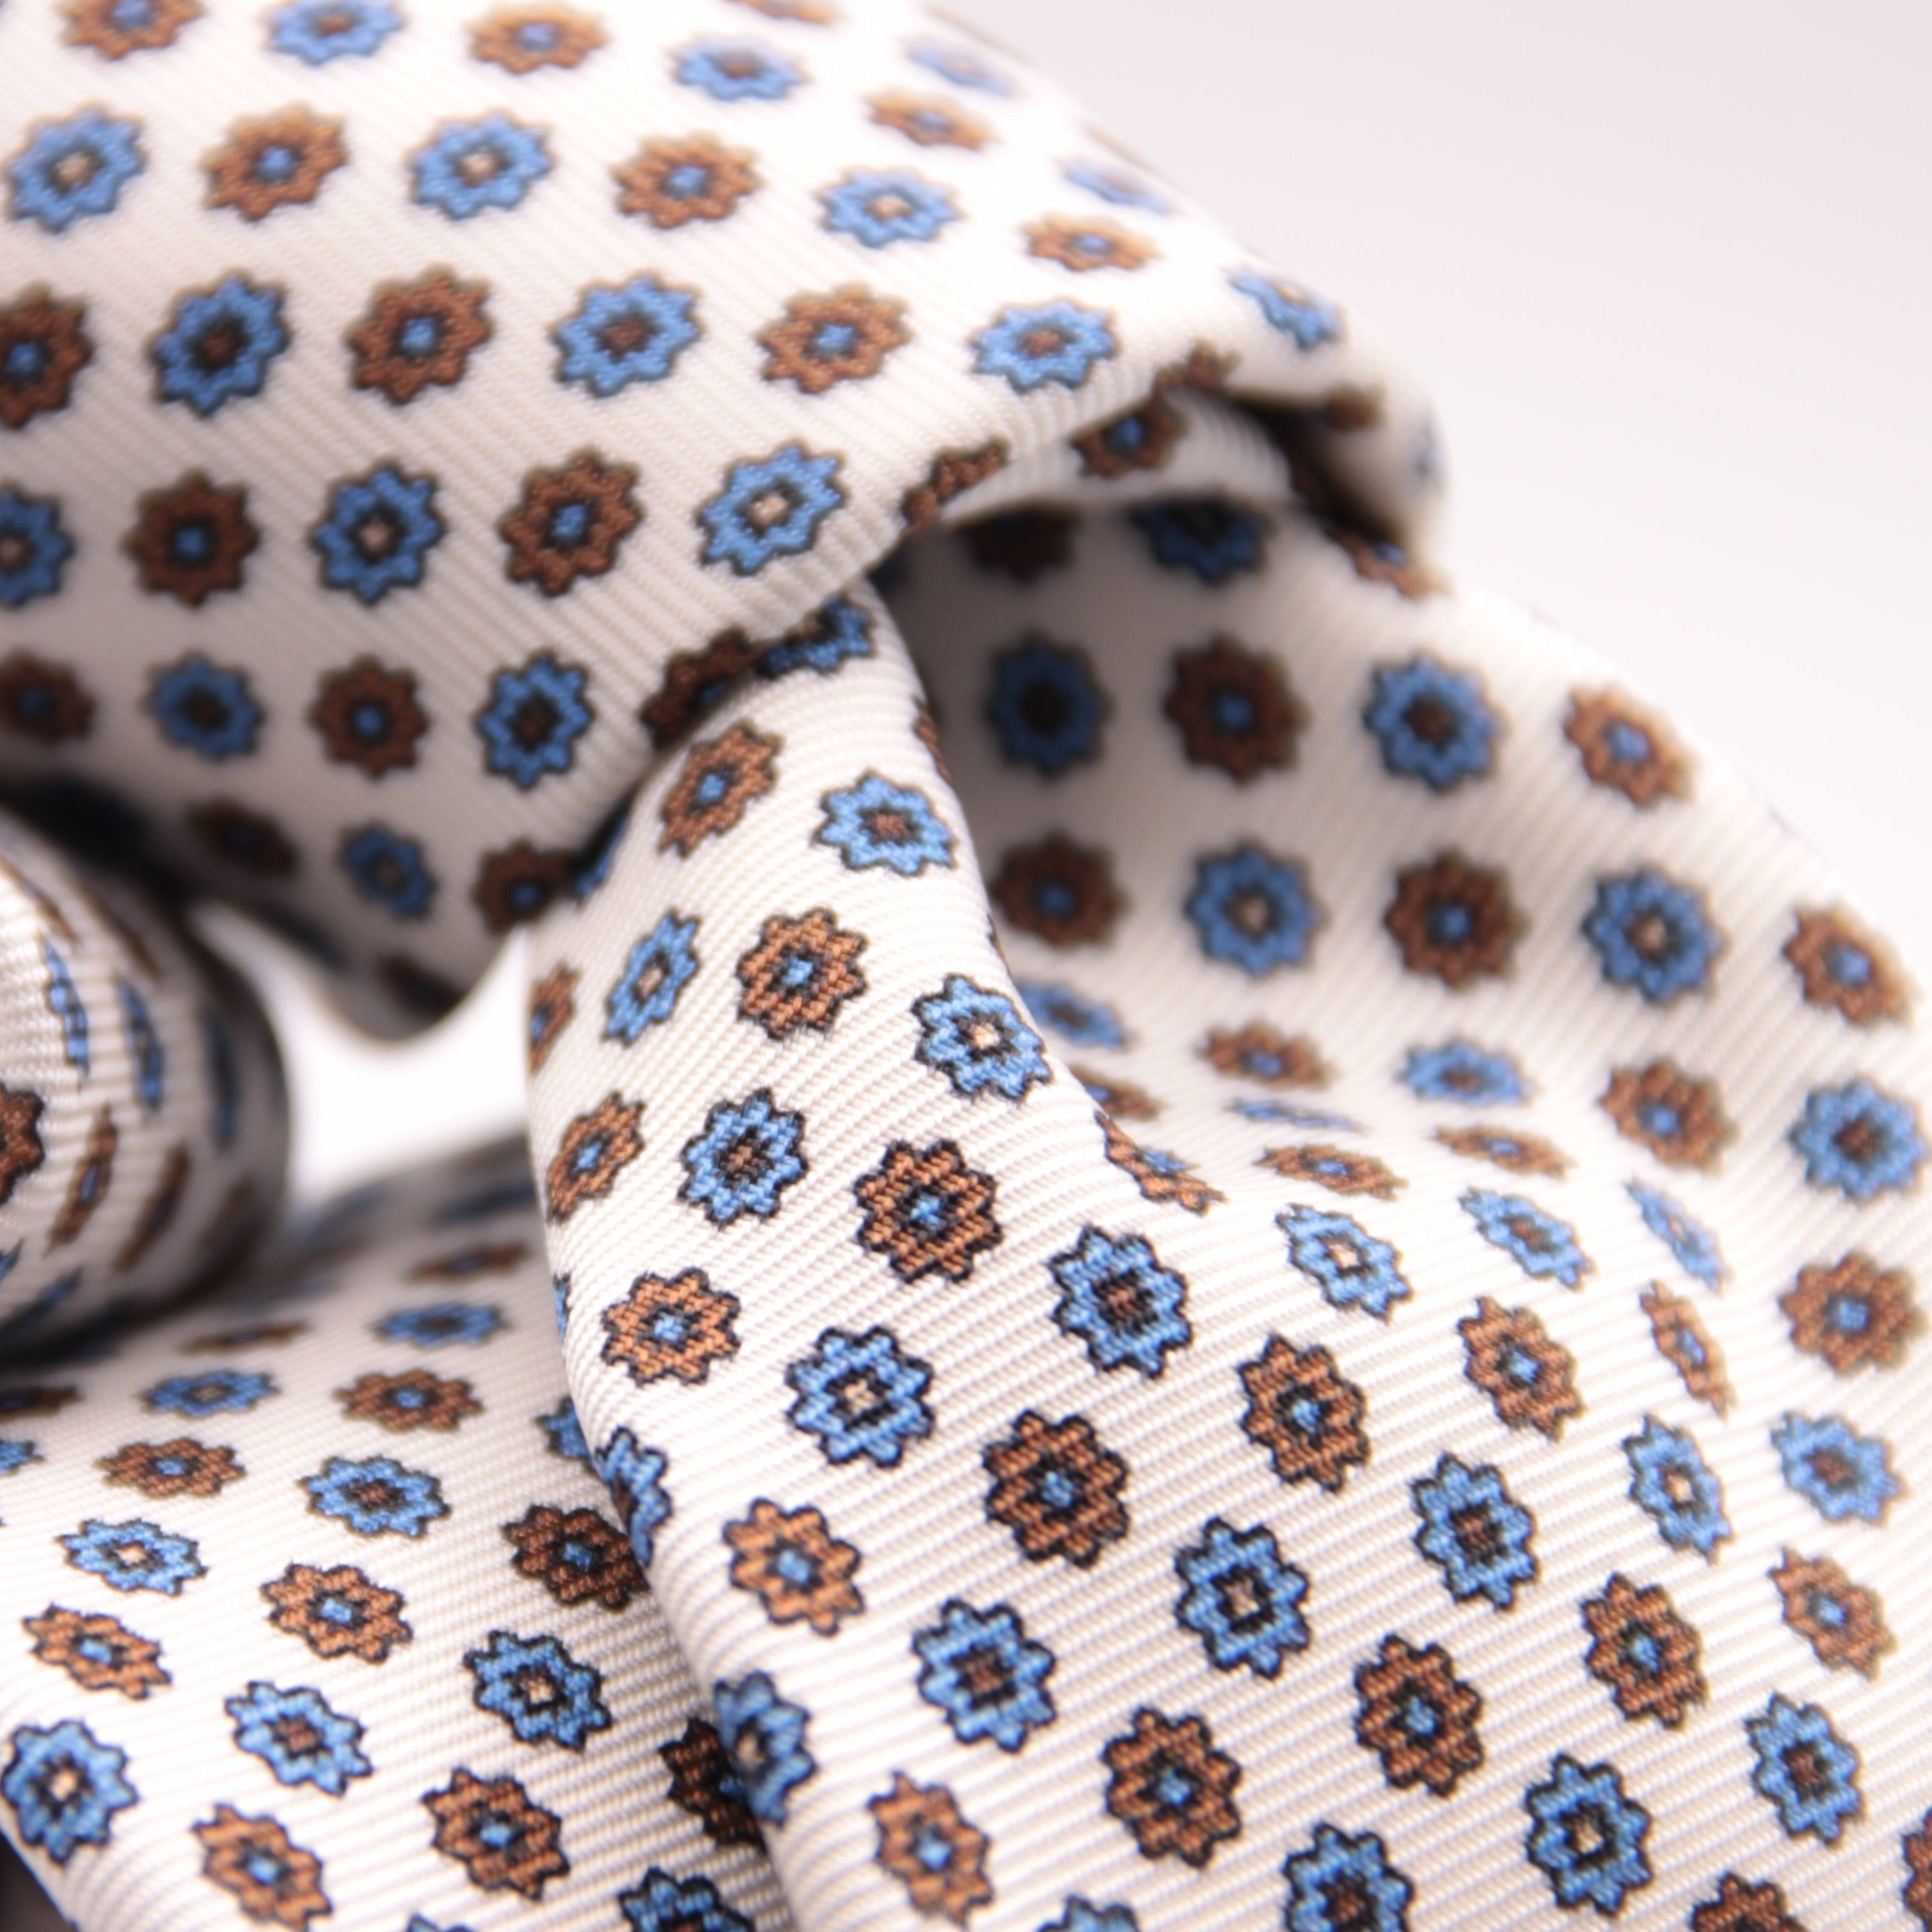 Holliday & Brown - Printed Silk - Brown/Orange/Off White motif tie –  Cruciani & Bella